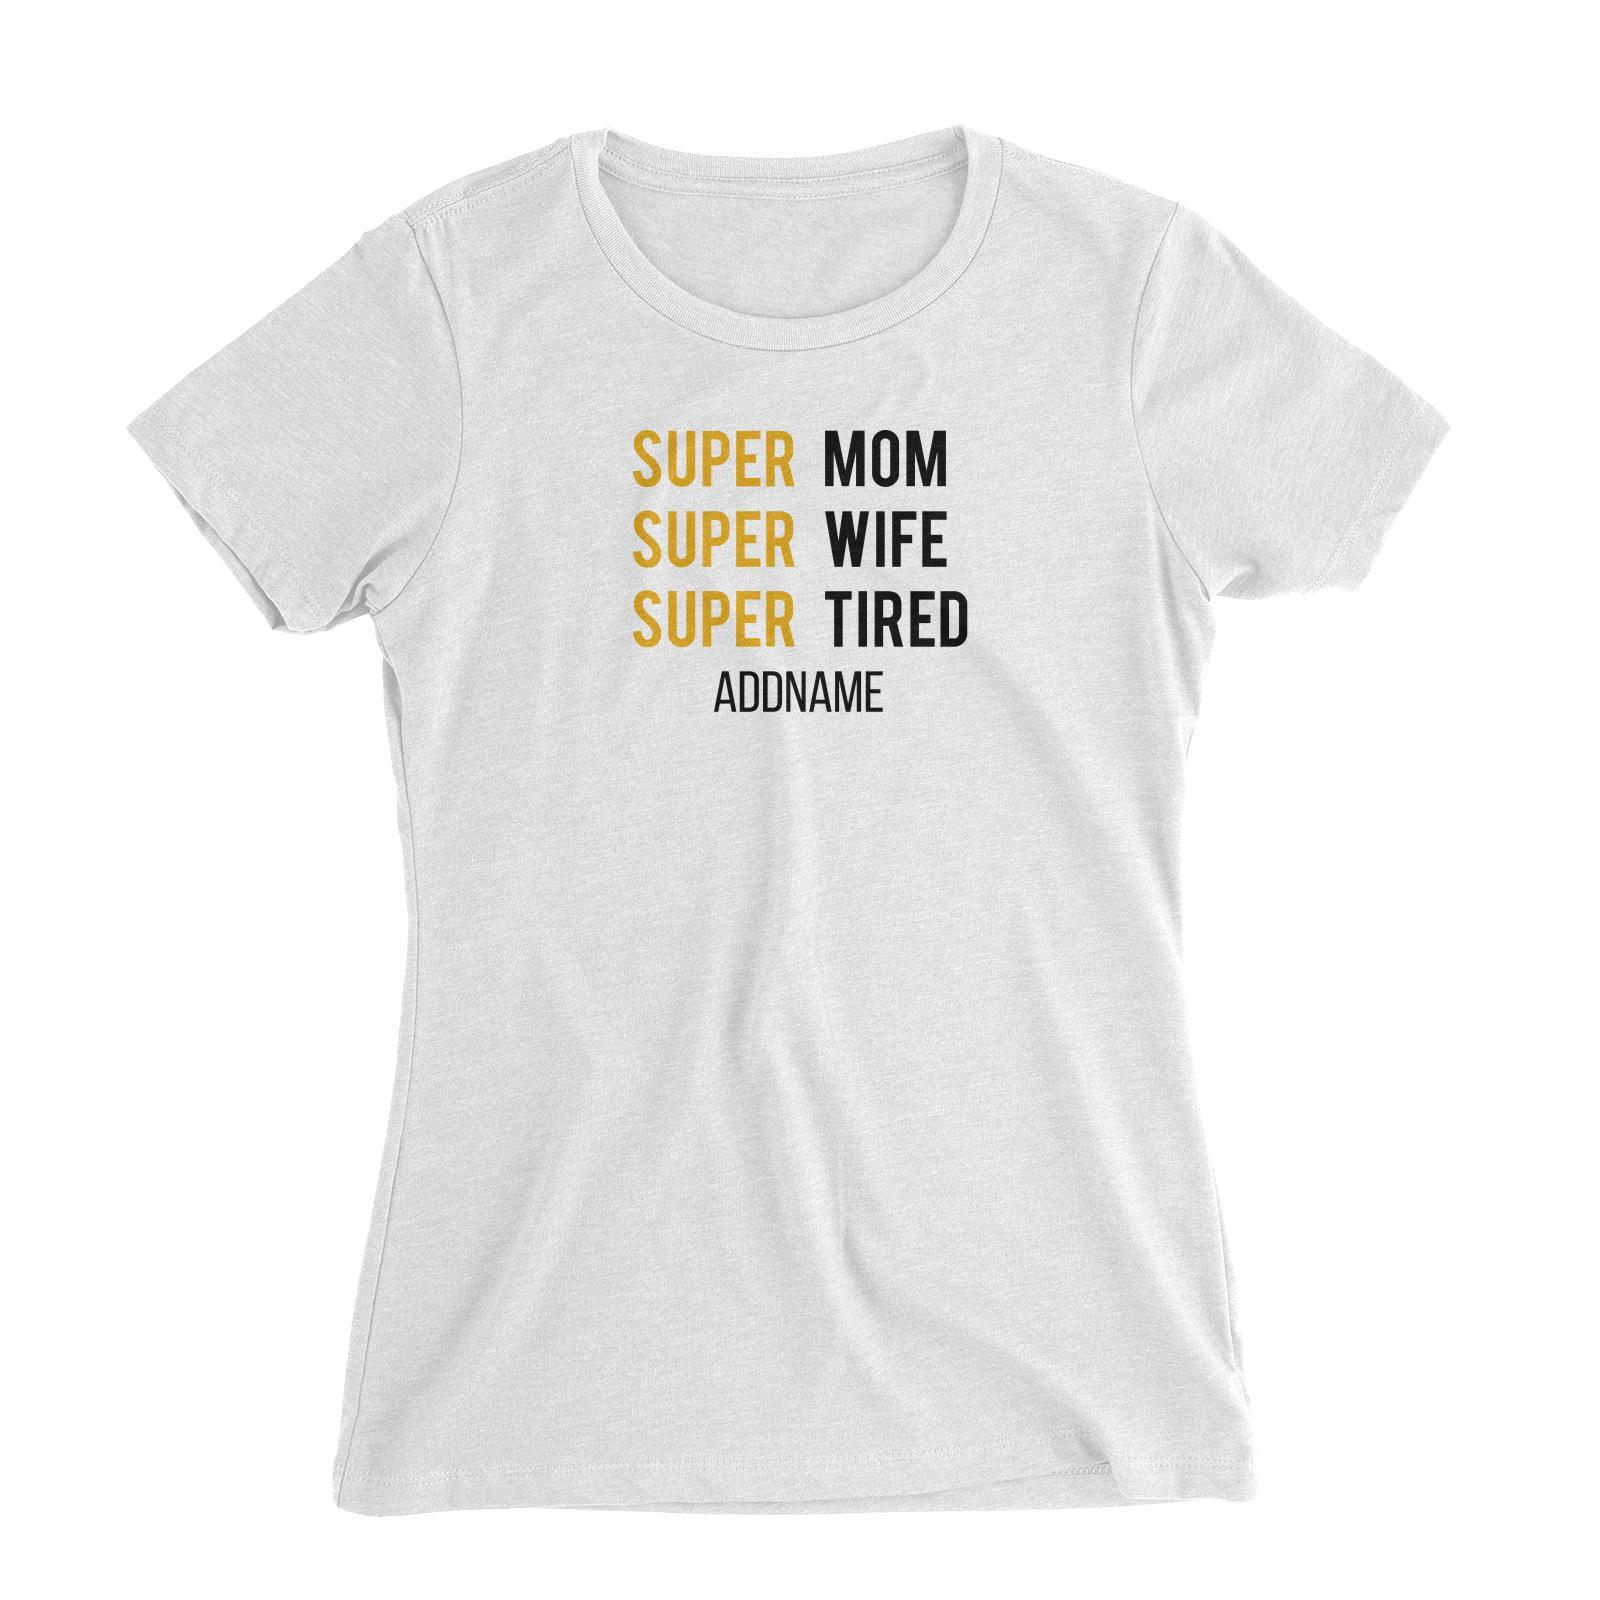 Super Mom Super Wife Super Tired Women's Slim Fit T-Shirt